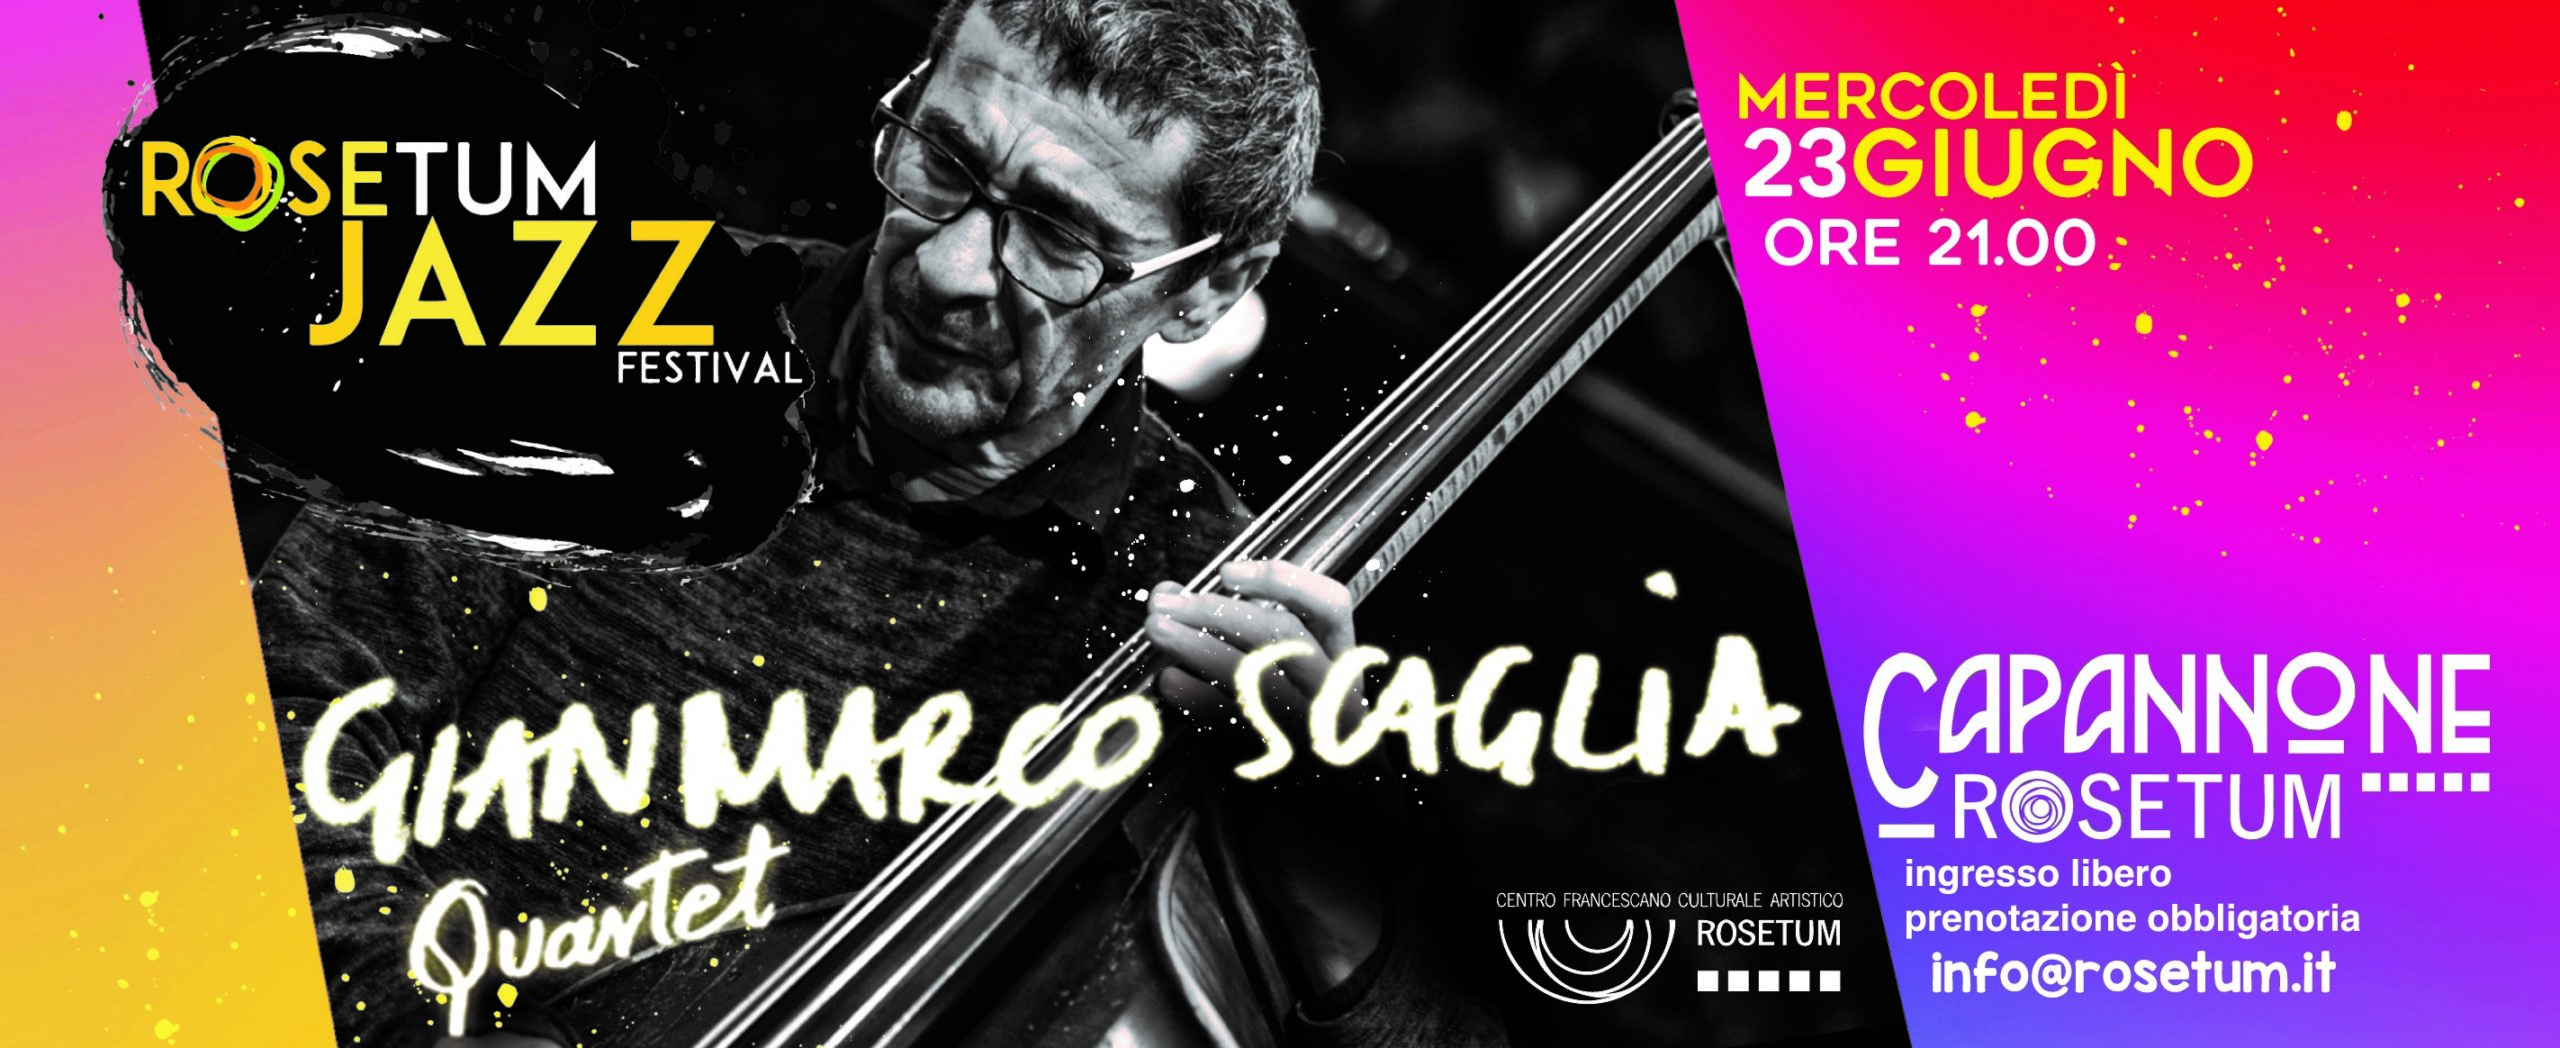 Gianmarco Scaglia quartet 23 giugno 2021 Rosetum Jazz Festival